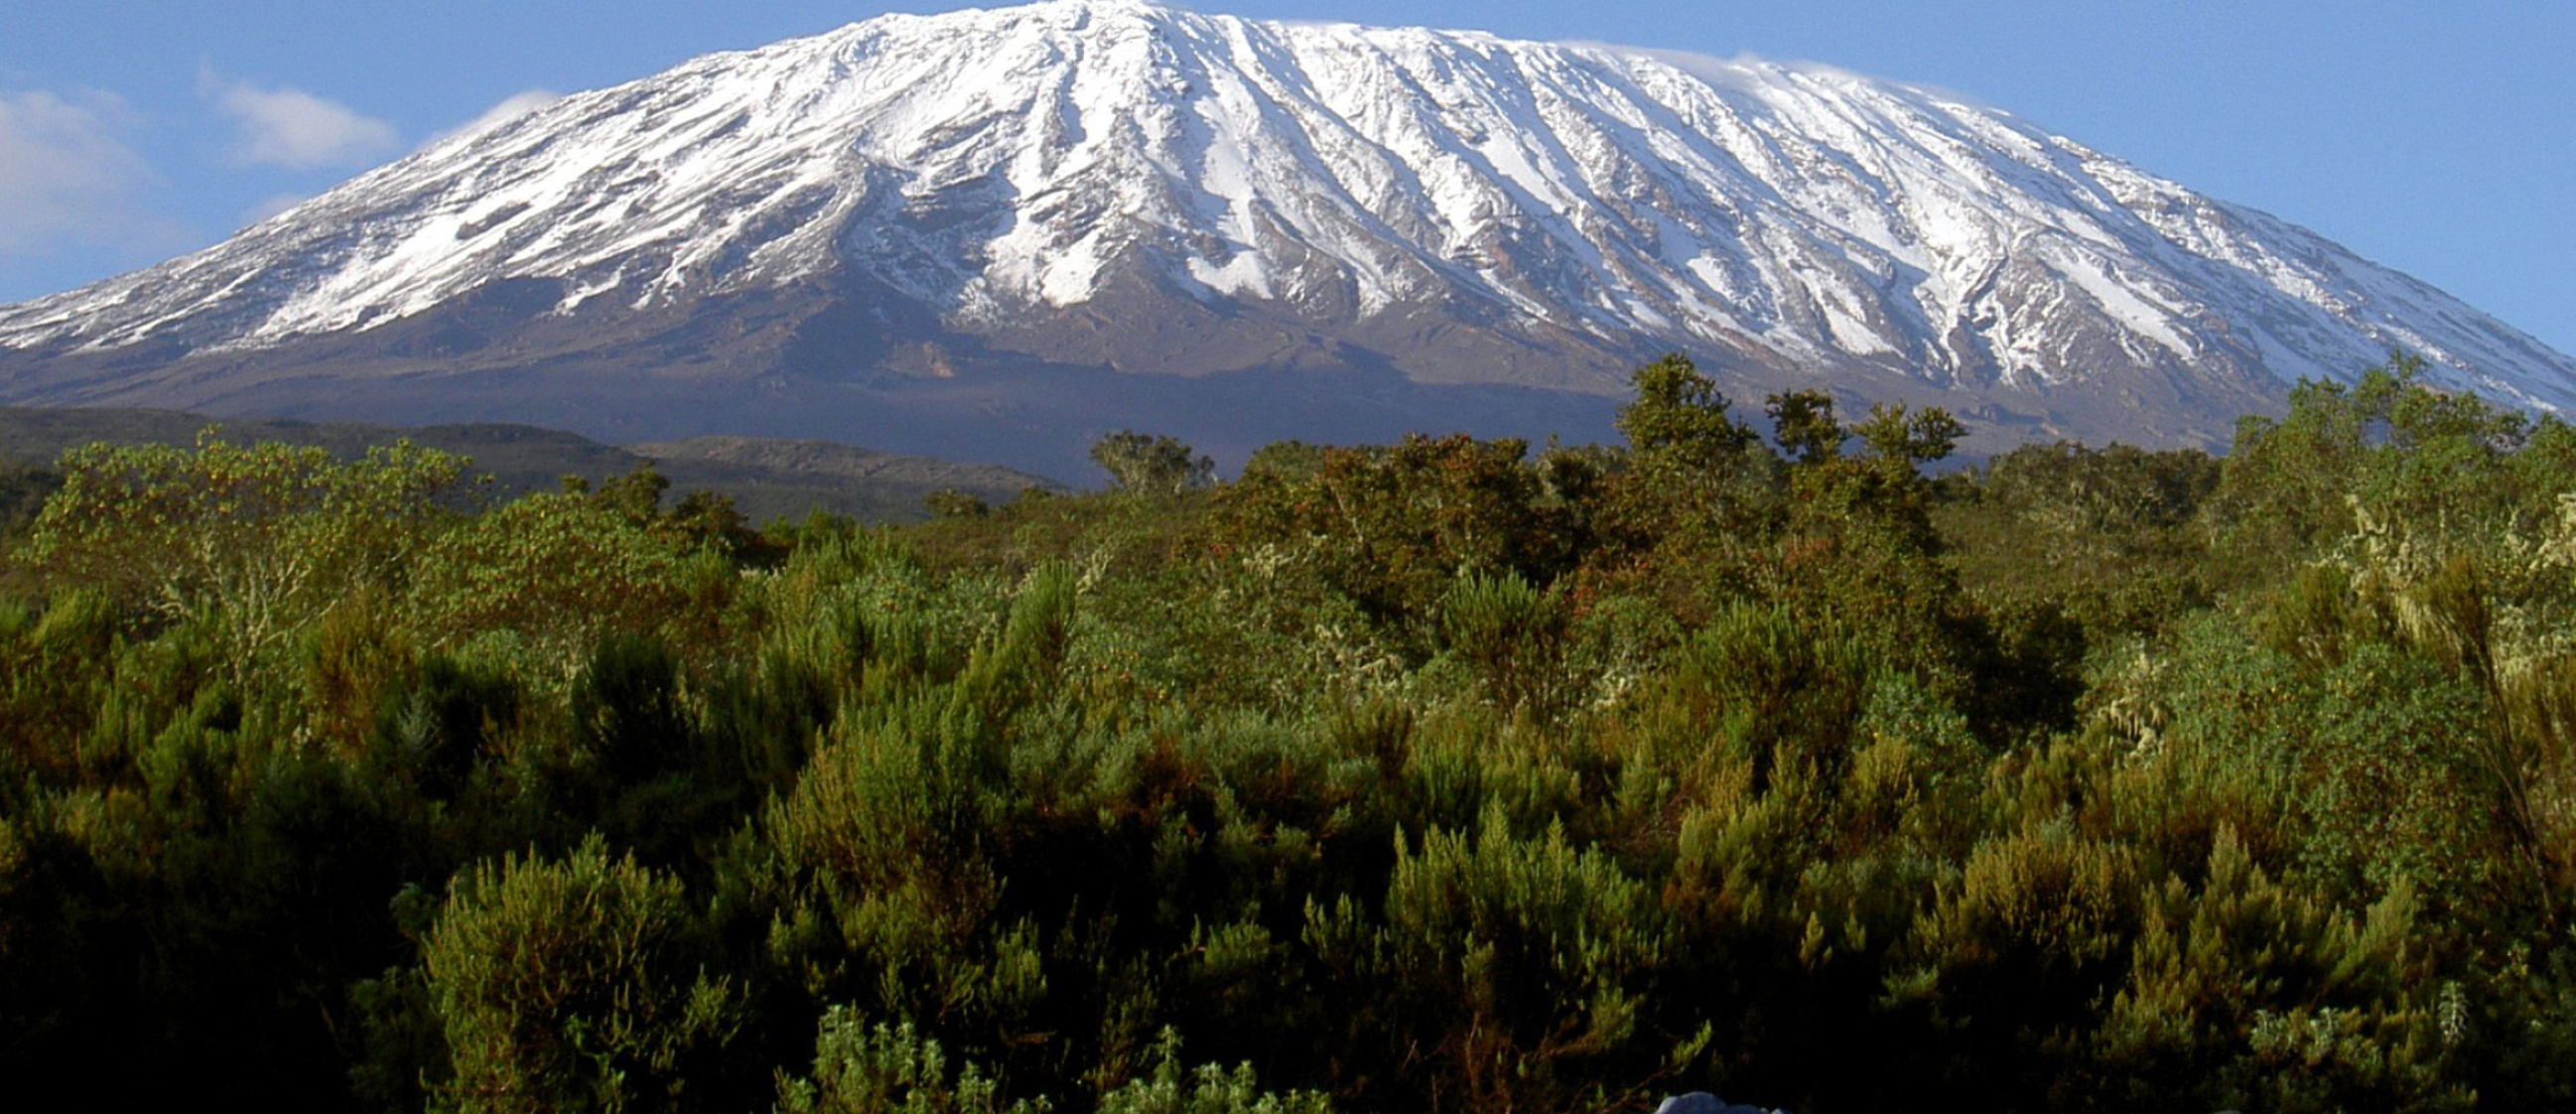 Kilimanjaro, Travels, Mountain view, Nature photography, 2600x1130 Dual Screen Desktop